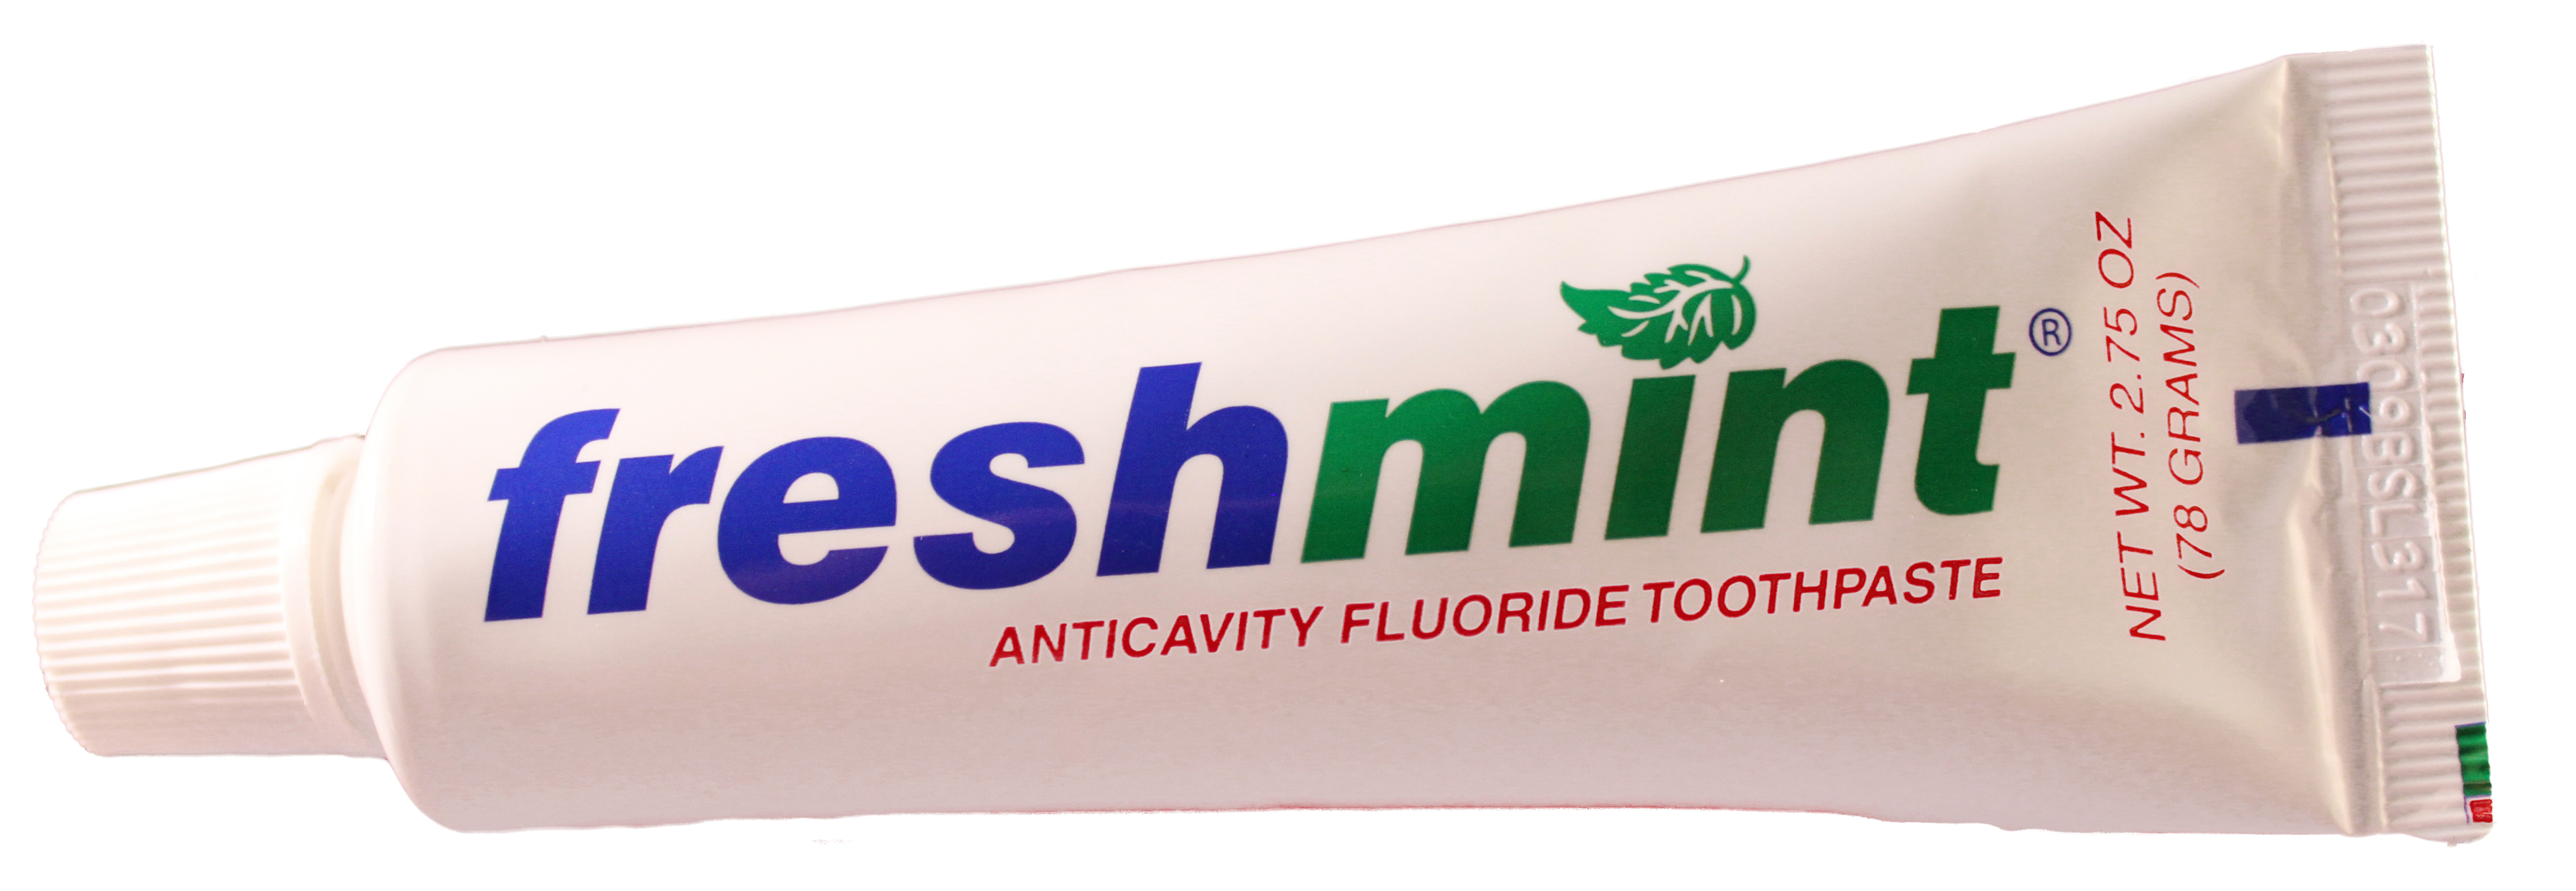 Freshmint 2.75 oz. Anticavity Fluoride TOOTHPASTE